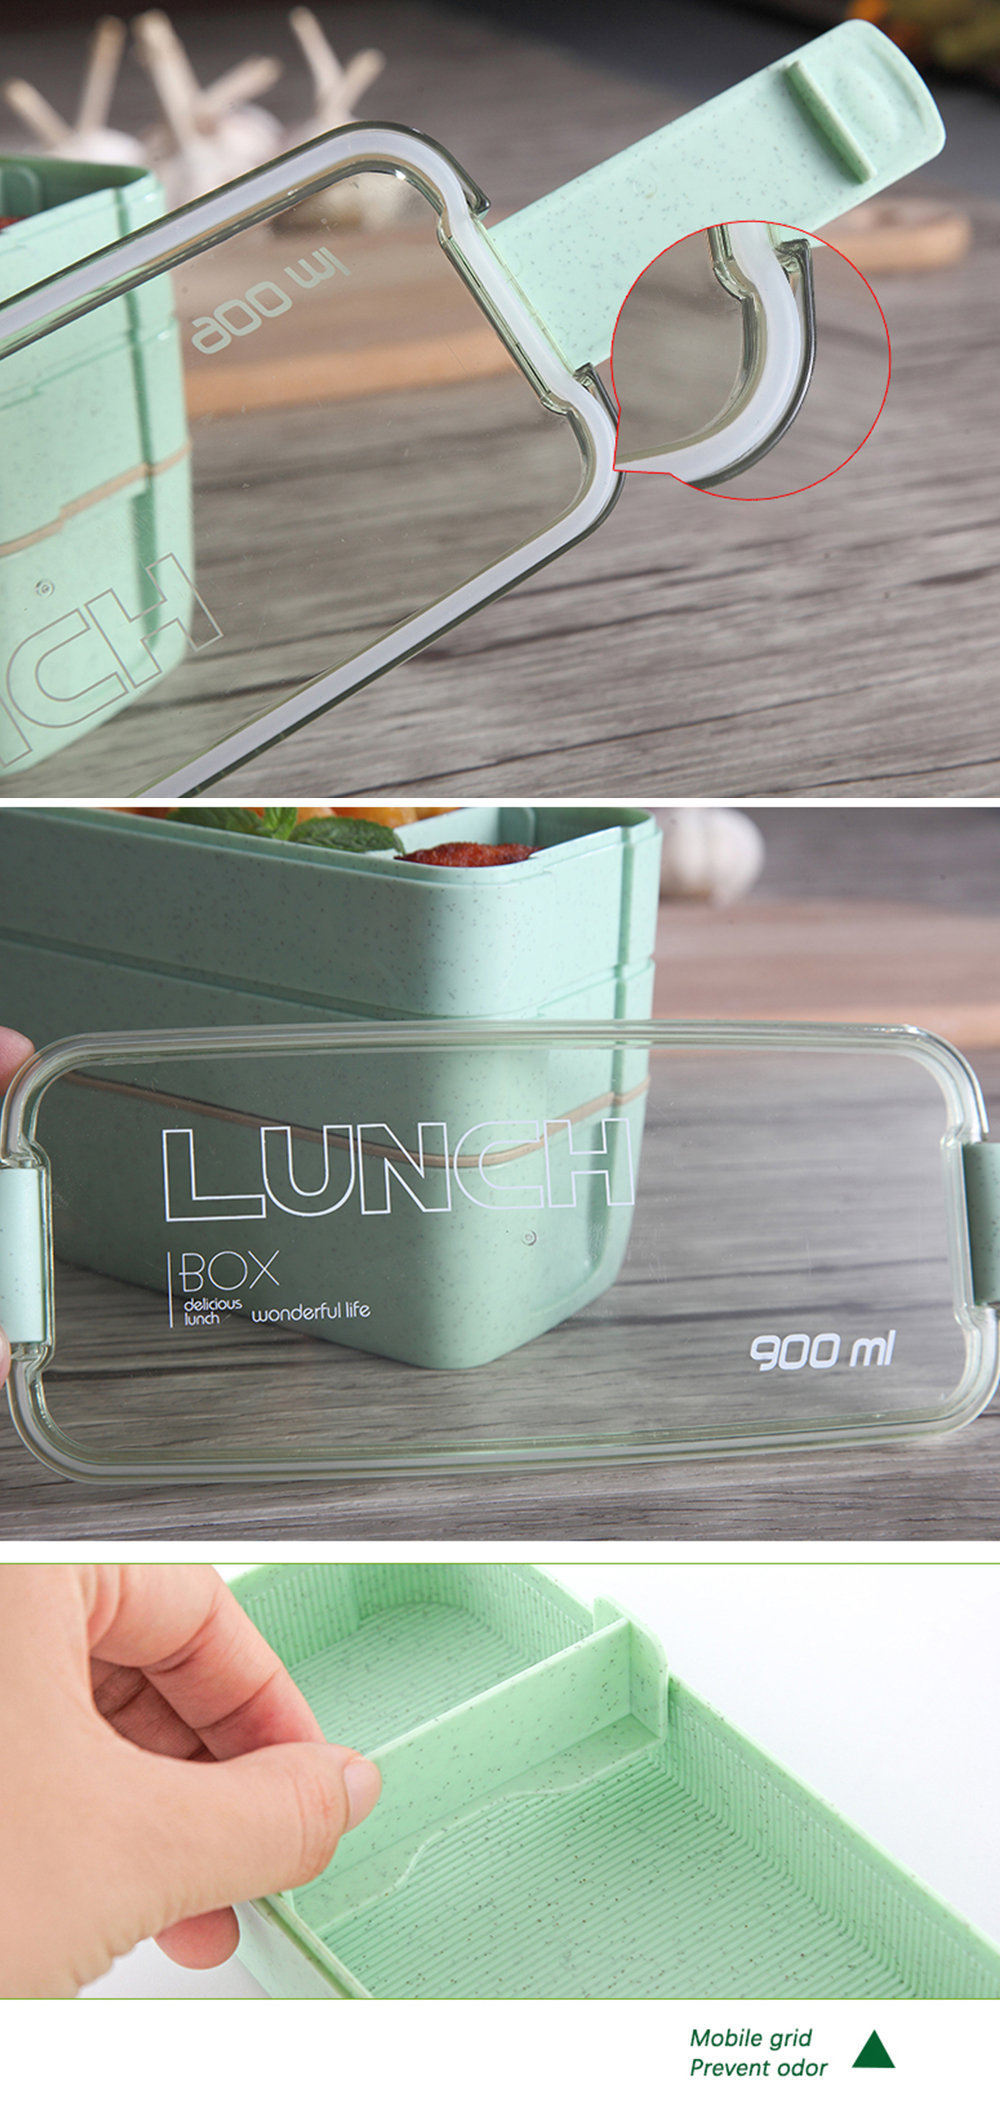 3-Layer Bento Box - Green - Beige - 3 Colors - ApolloBox